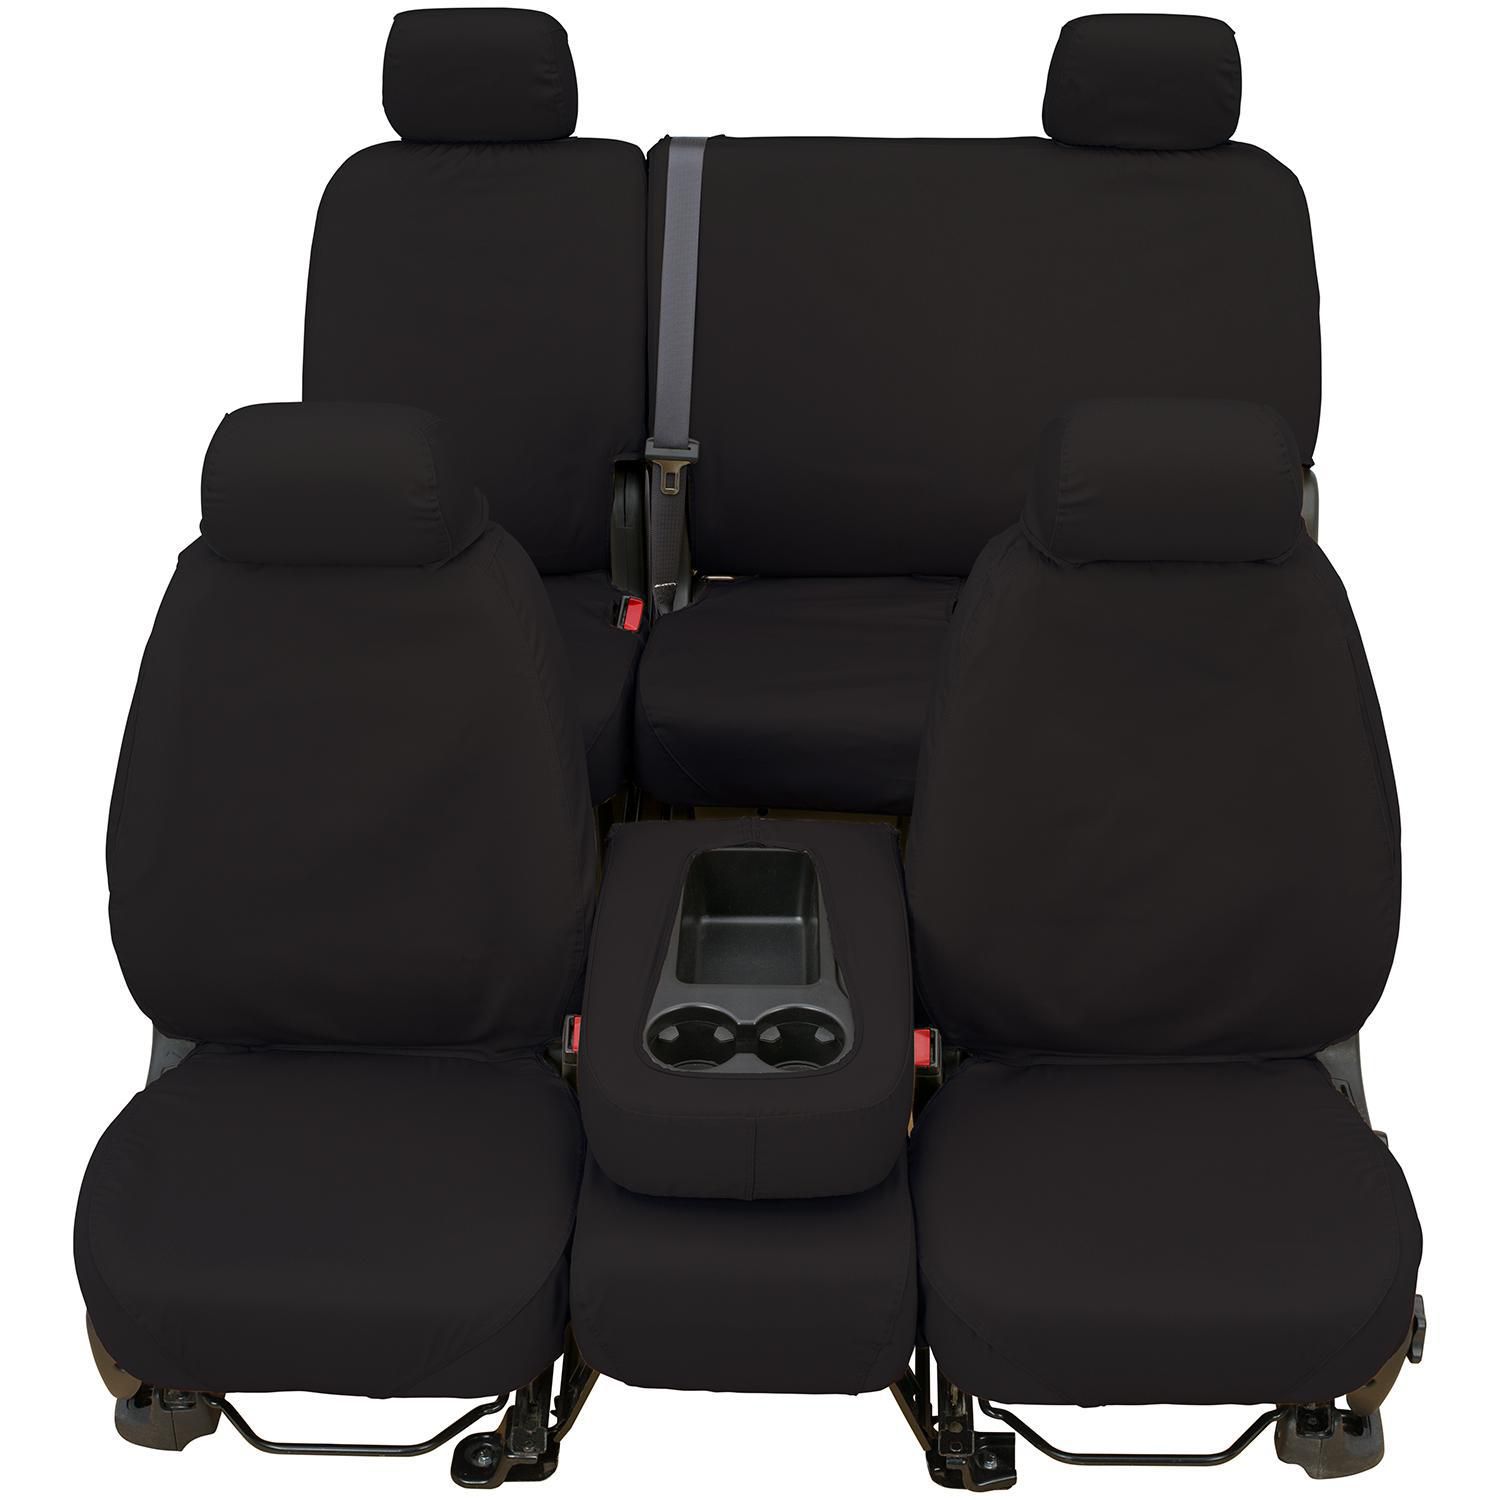 Covercraft Seatsaver Front Row Custom Fit Seat Cover For Select Nissan Fronti... Fits select: 2012 NISSAN FRONTIER SV/PRO-4X, 2010 NISSAN FRONTIER KING CAB SE/KING CAB LE/KING CAB NISMO - image 1 of 3